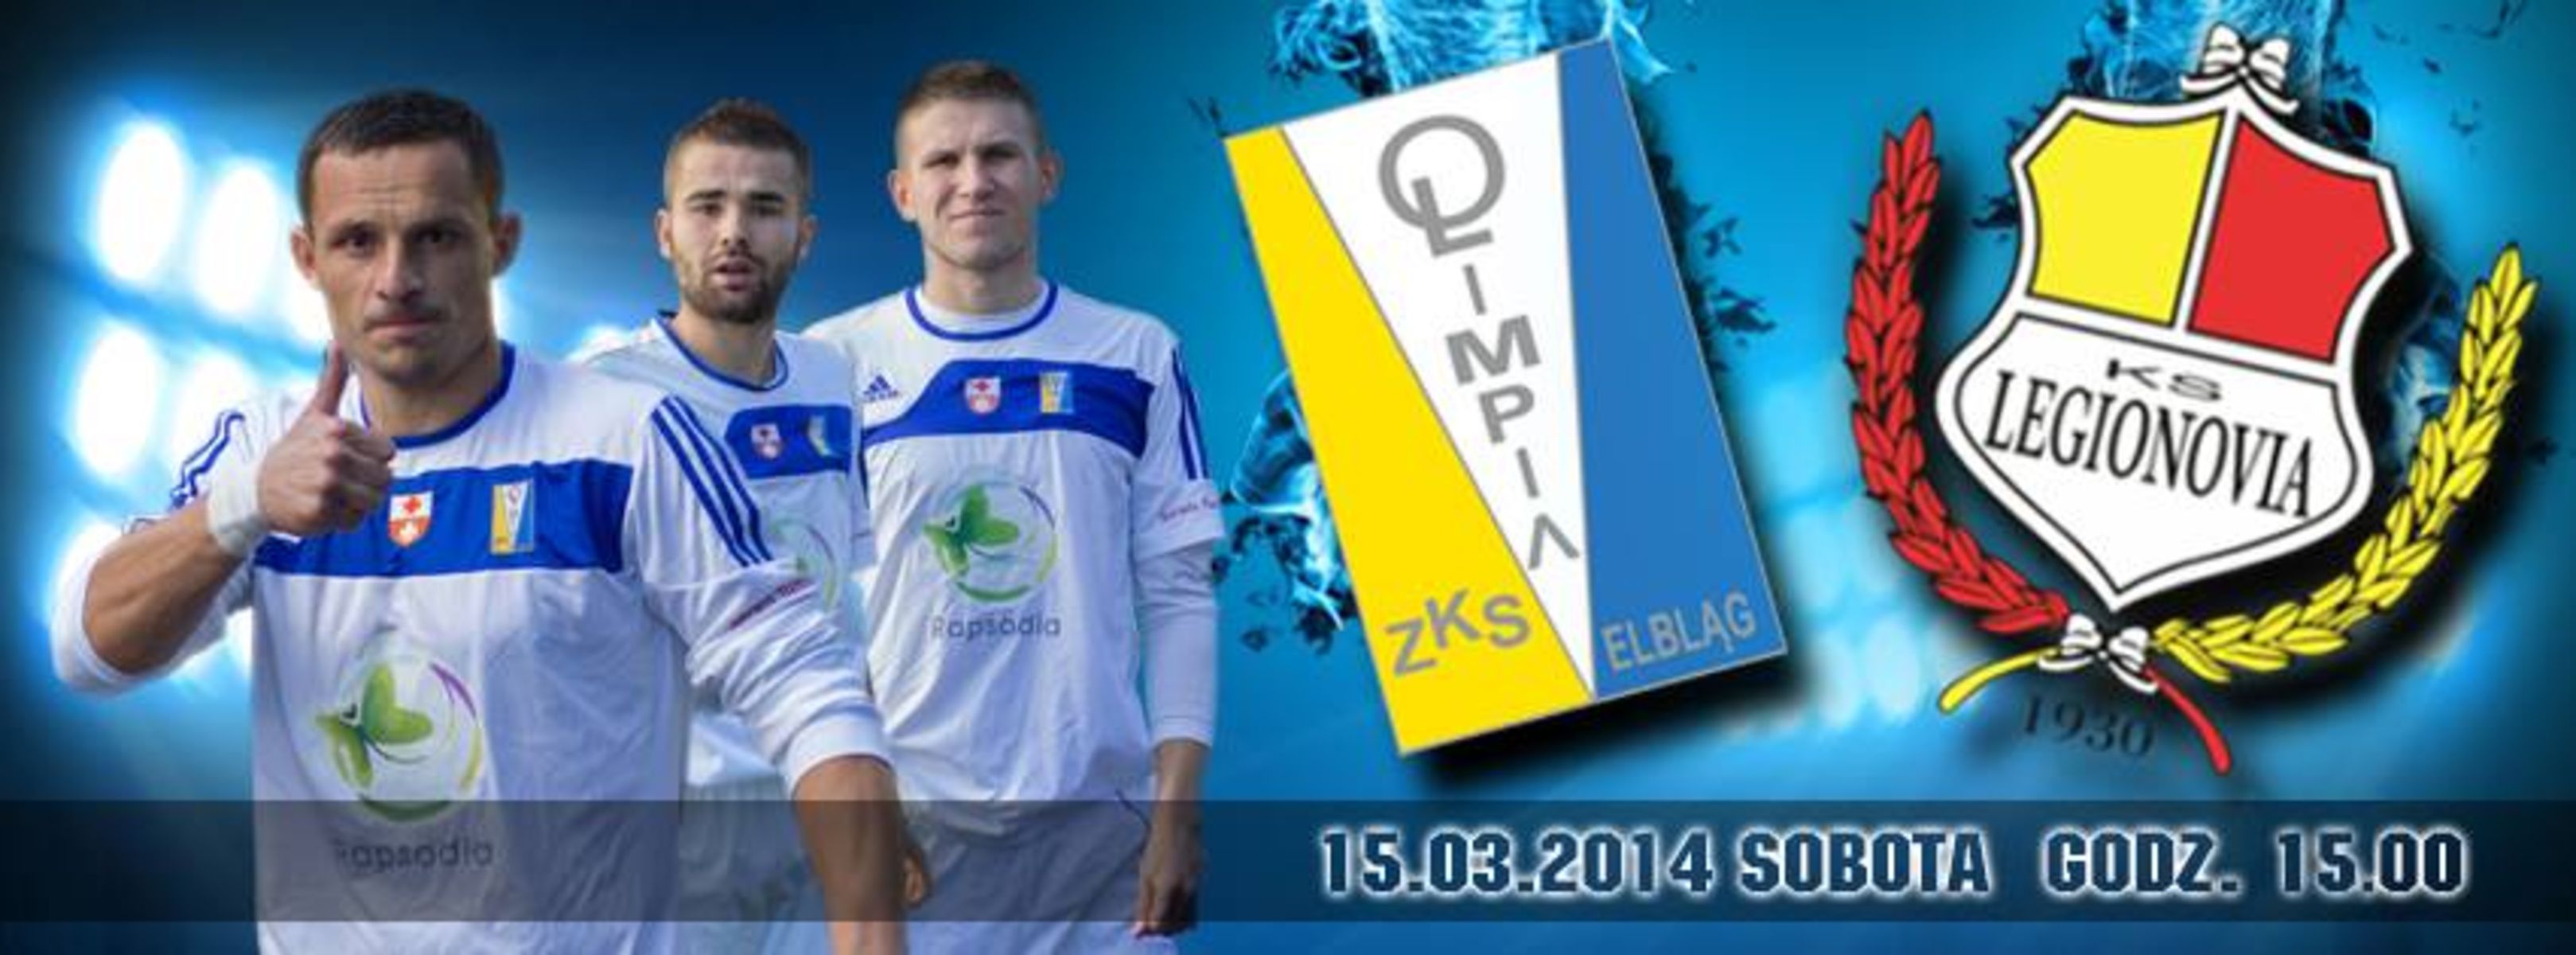 Plakat promujący mecz w Eblągu. Fot. olimpia.elblag.com.pl